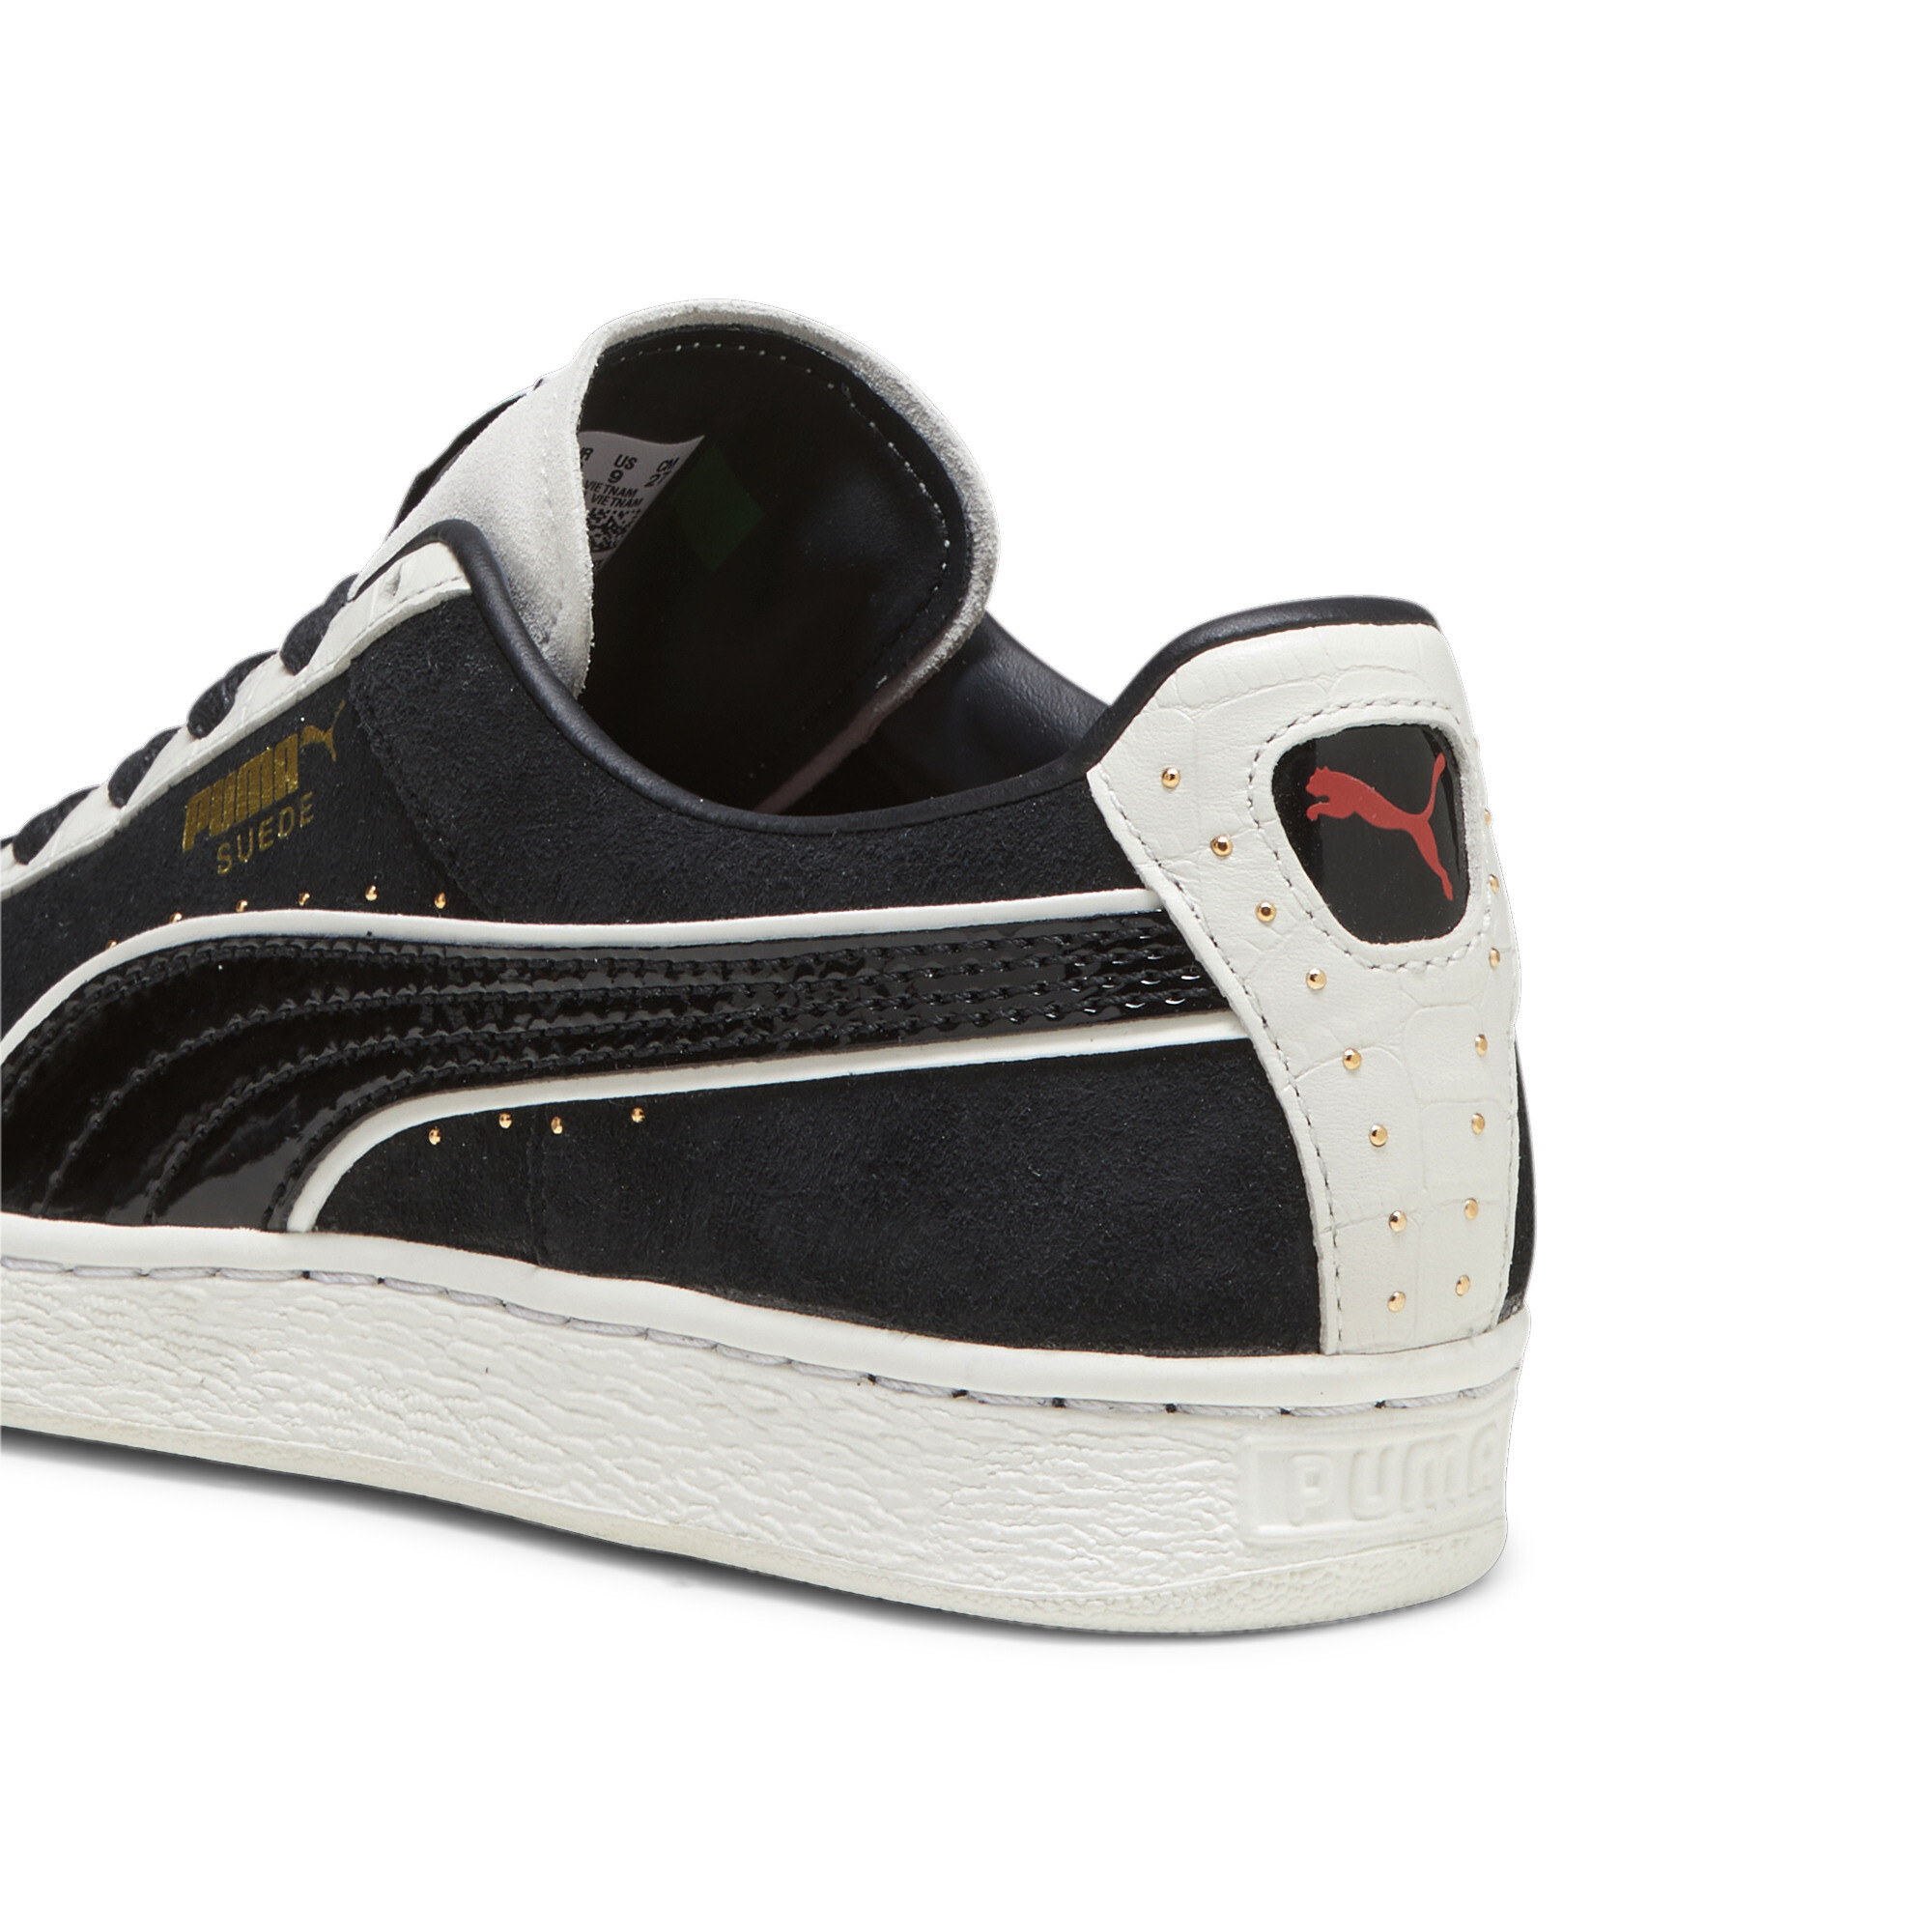 Men's PUMA Suede 'Collector's Edition' Sneakers In Black, Size EU 48